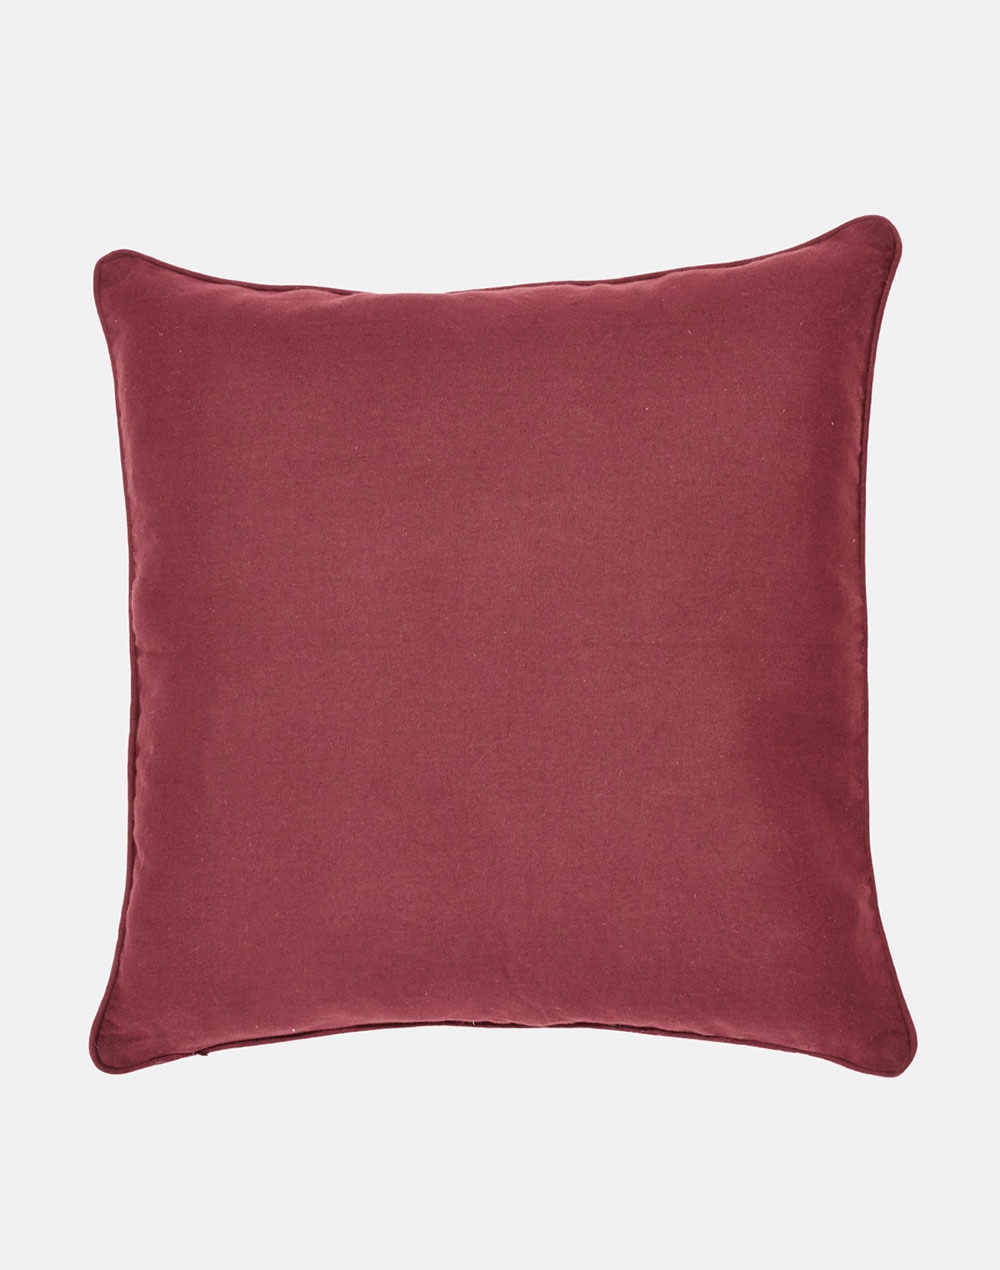 Trushita Cotton Printed Cushion Cover